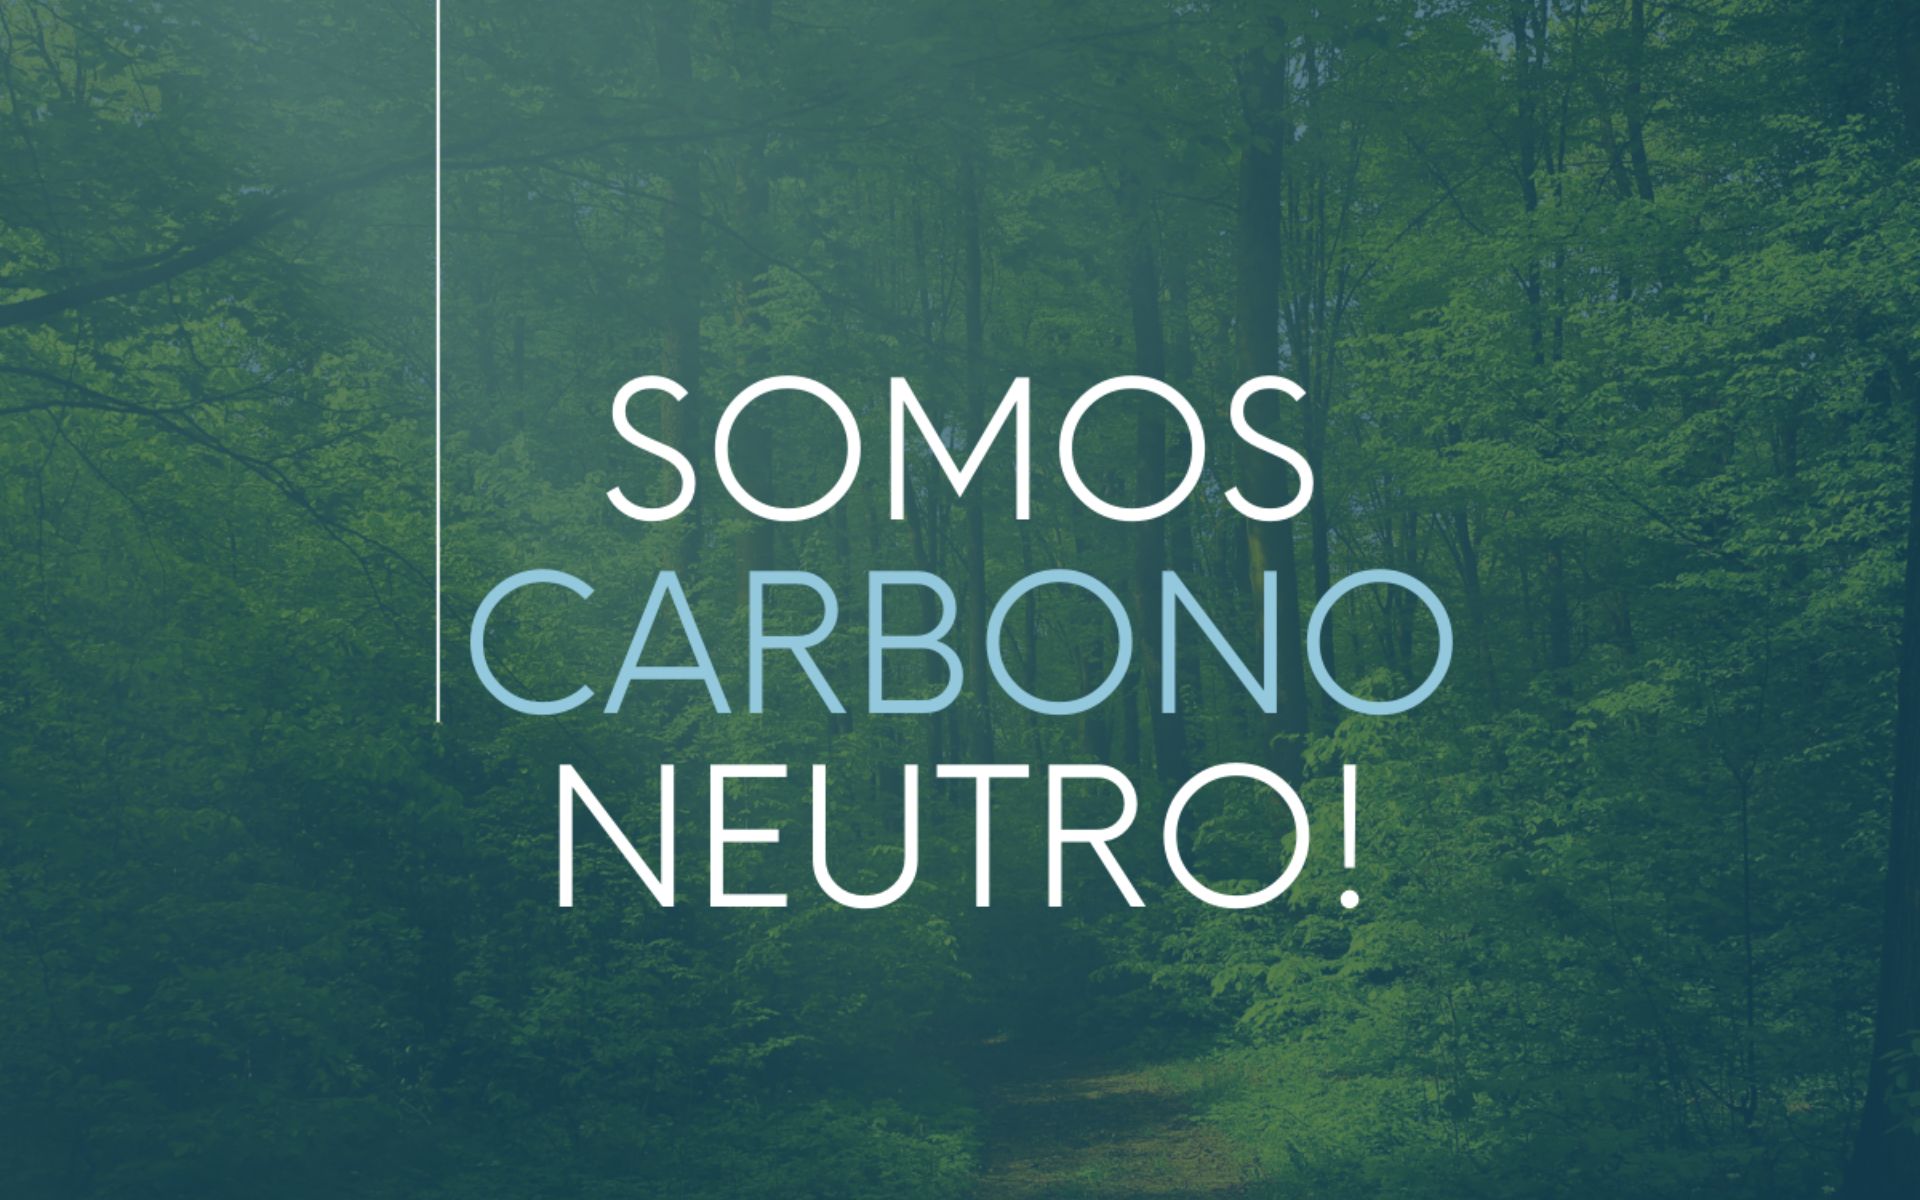 Somos Carbono Neutro!